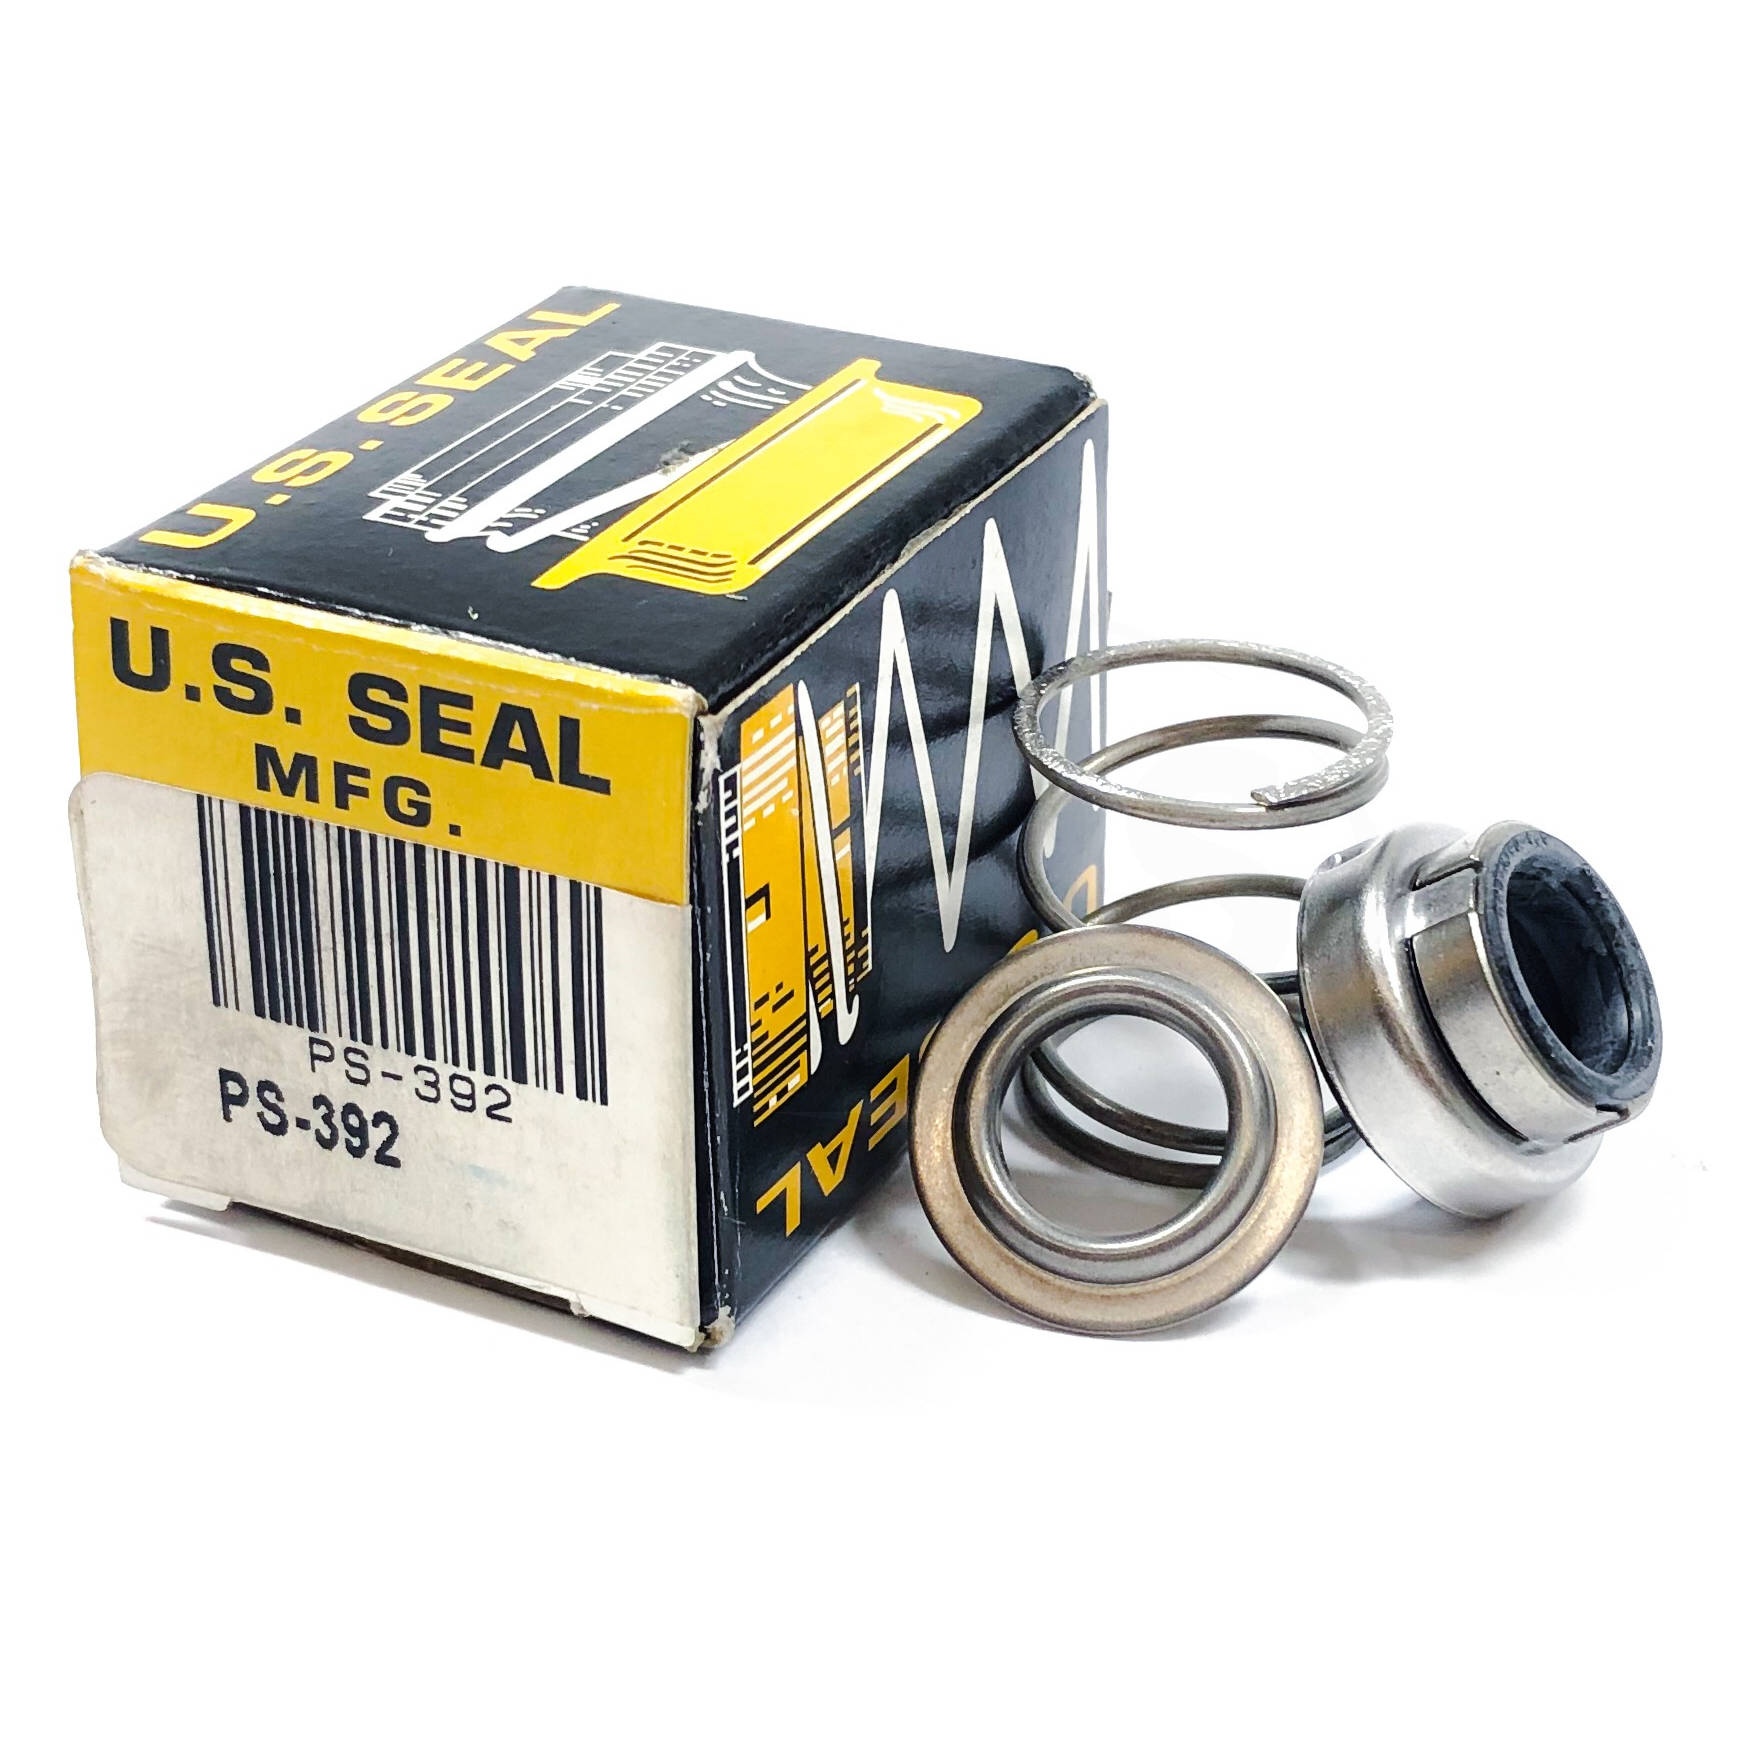 PS-392 U.S. Seal Mfg 1/2' Pump Seal 1